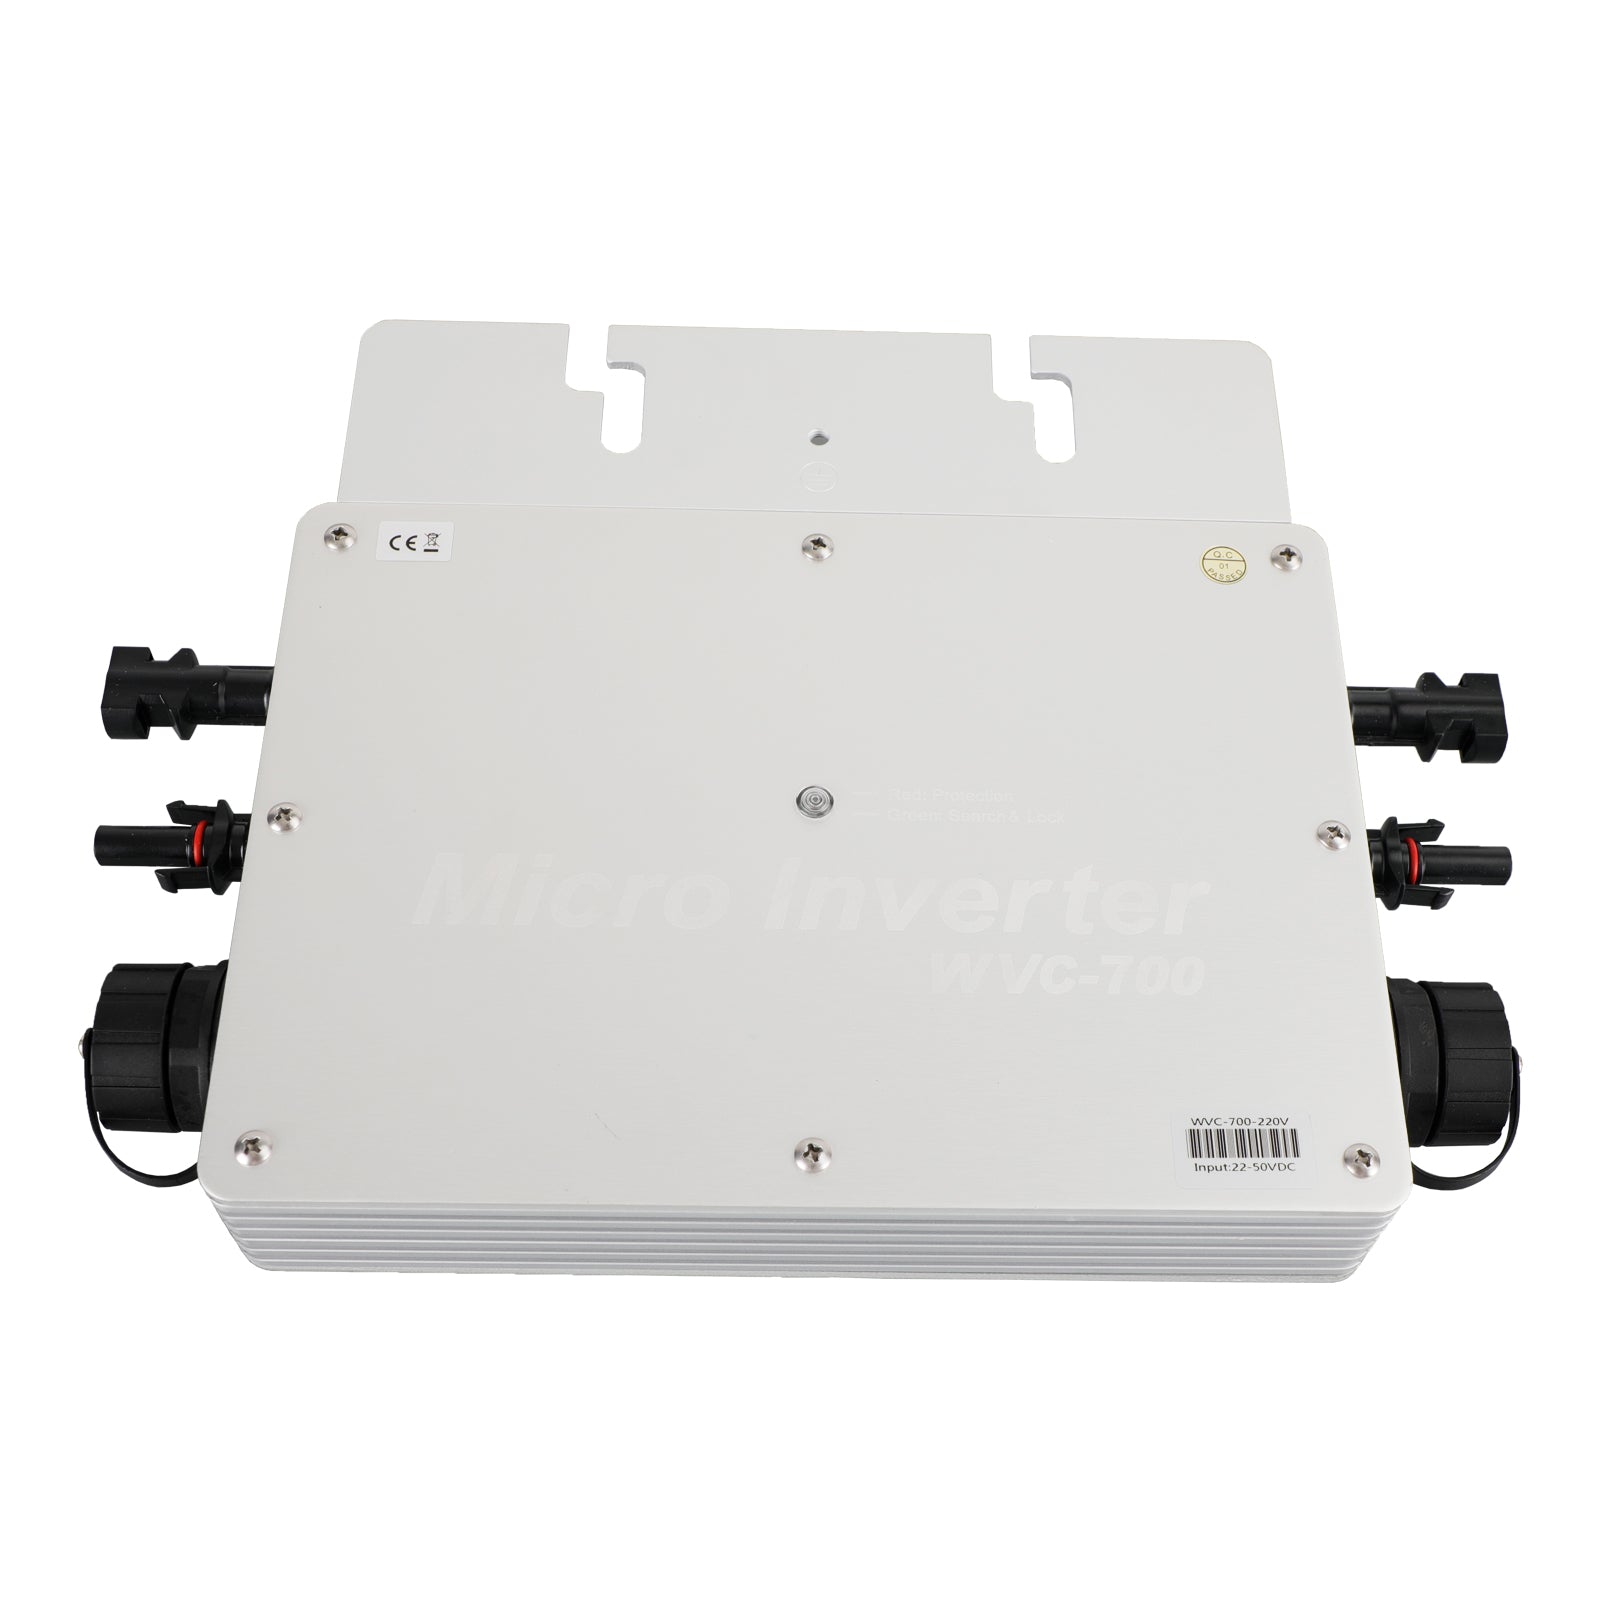 600W/700W Solar Inverter Grid Tie MPPT Micro Inverter APP Control with Display